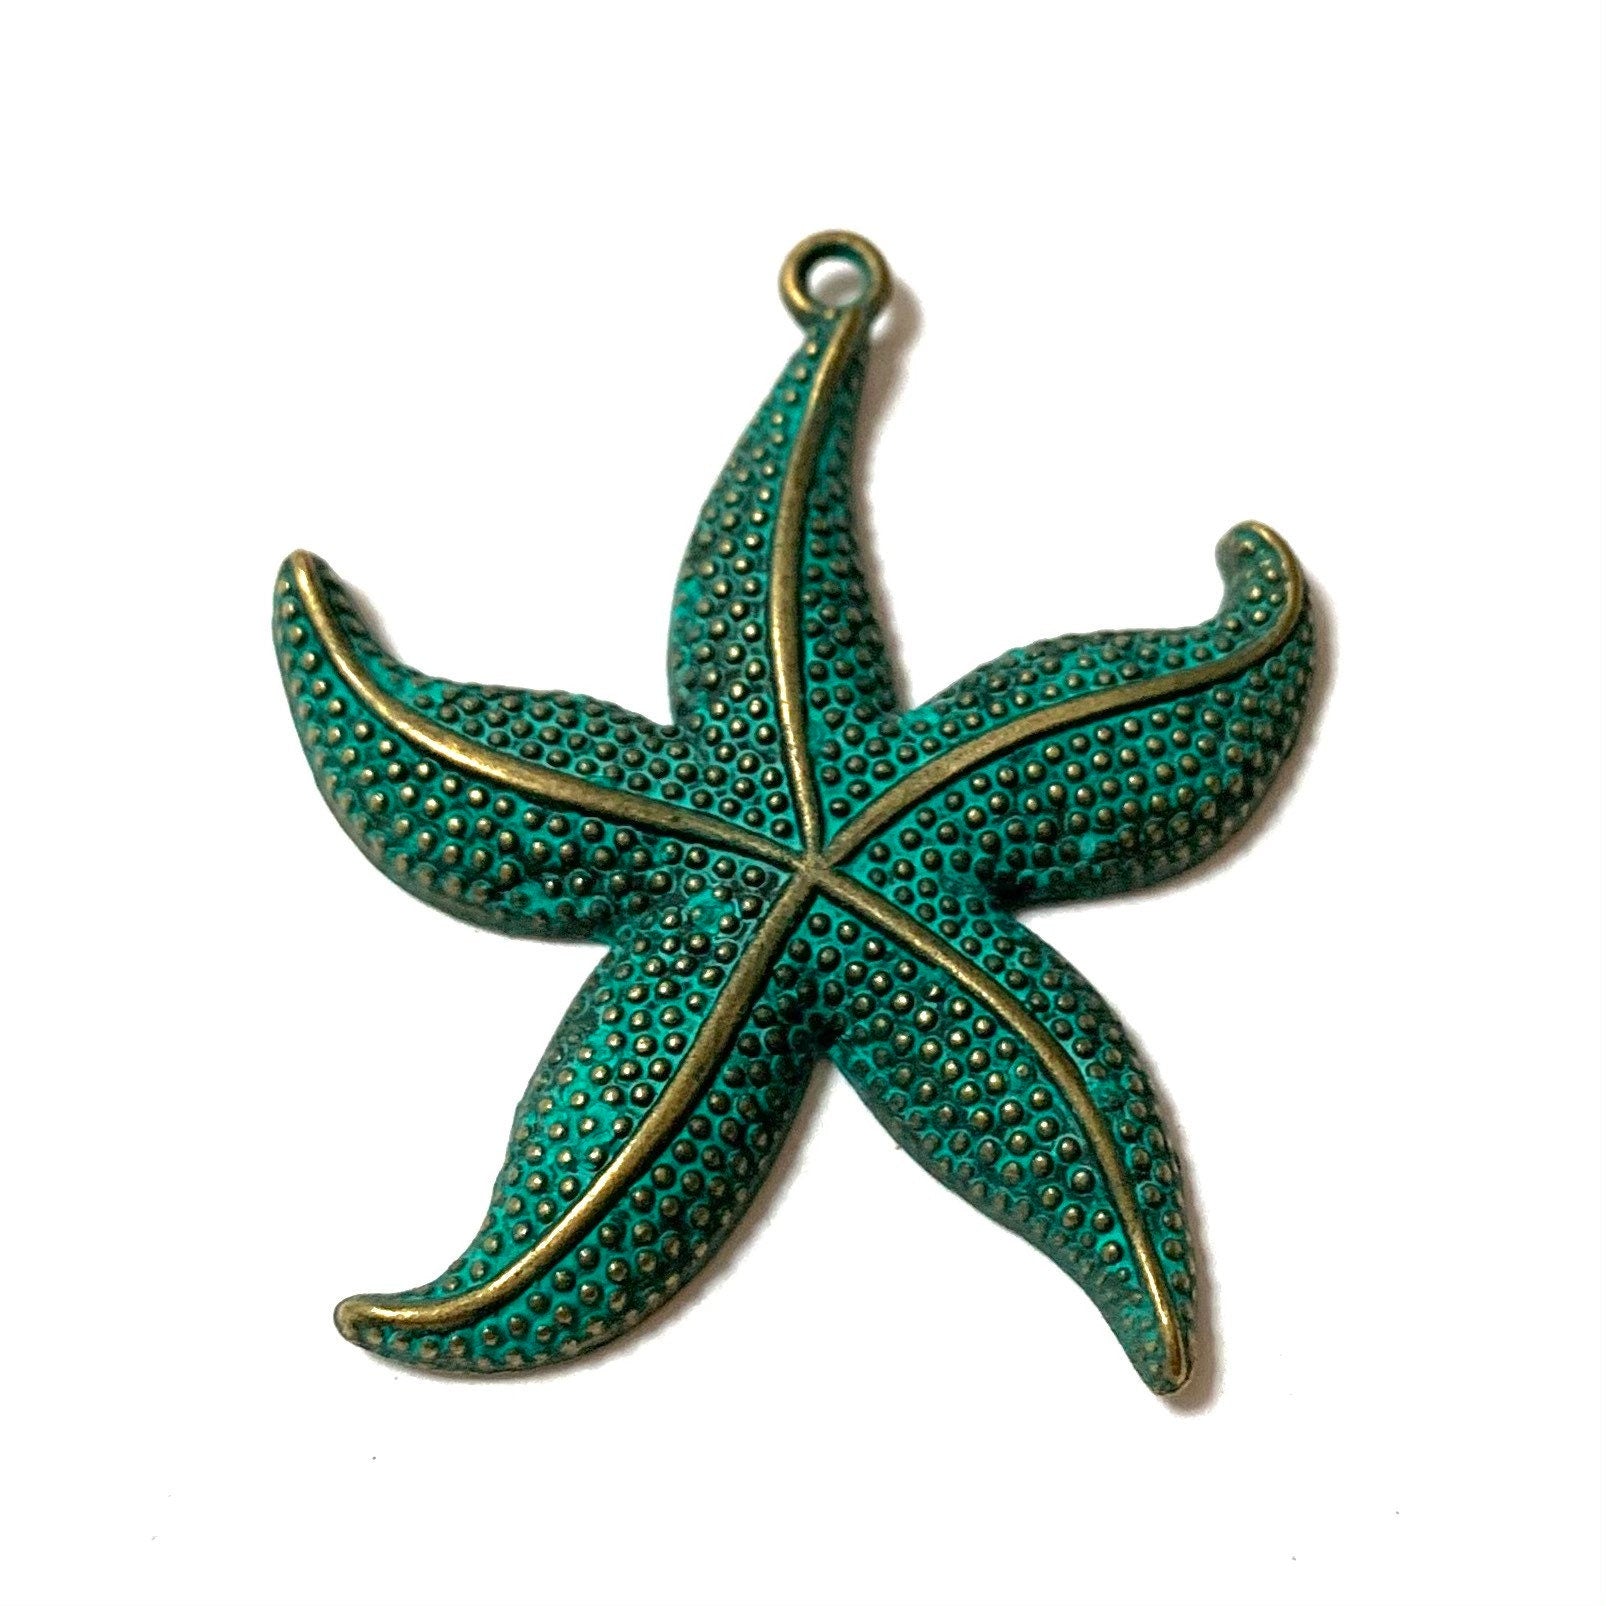 Large Starfish Pendant - Verdigris Patina Finish - Beautiful Detailing